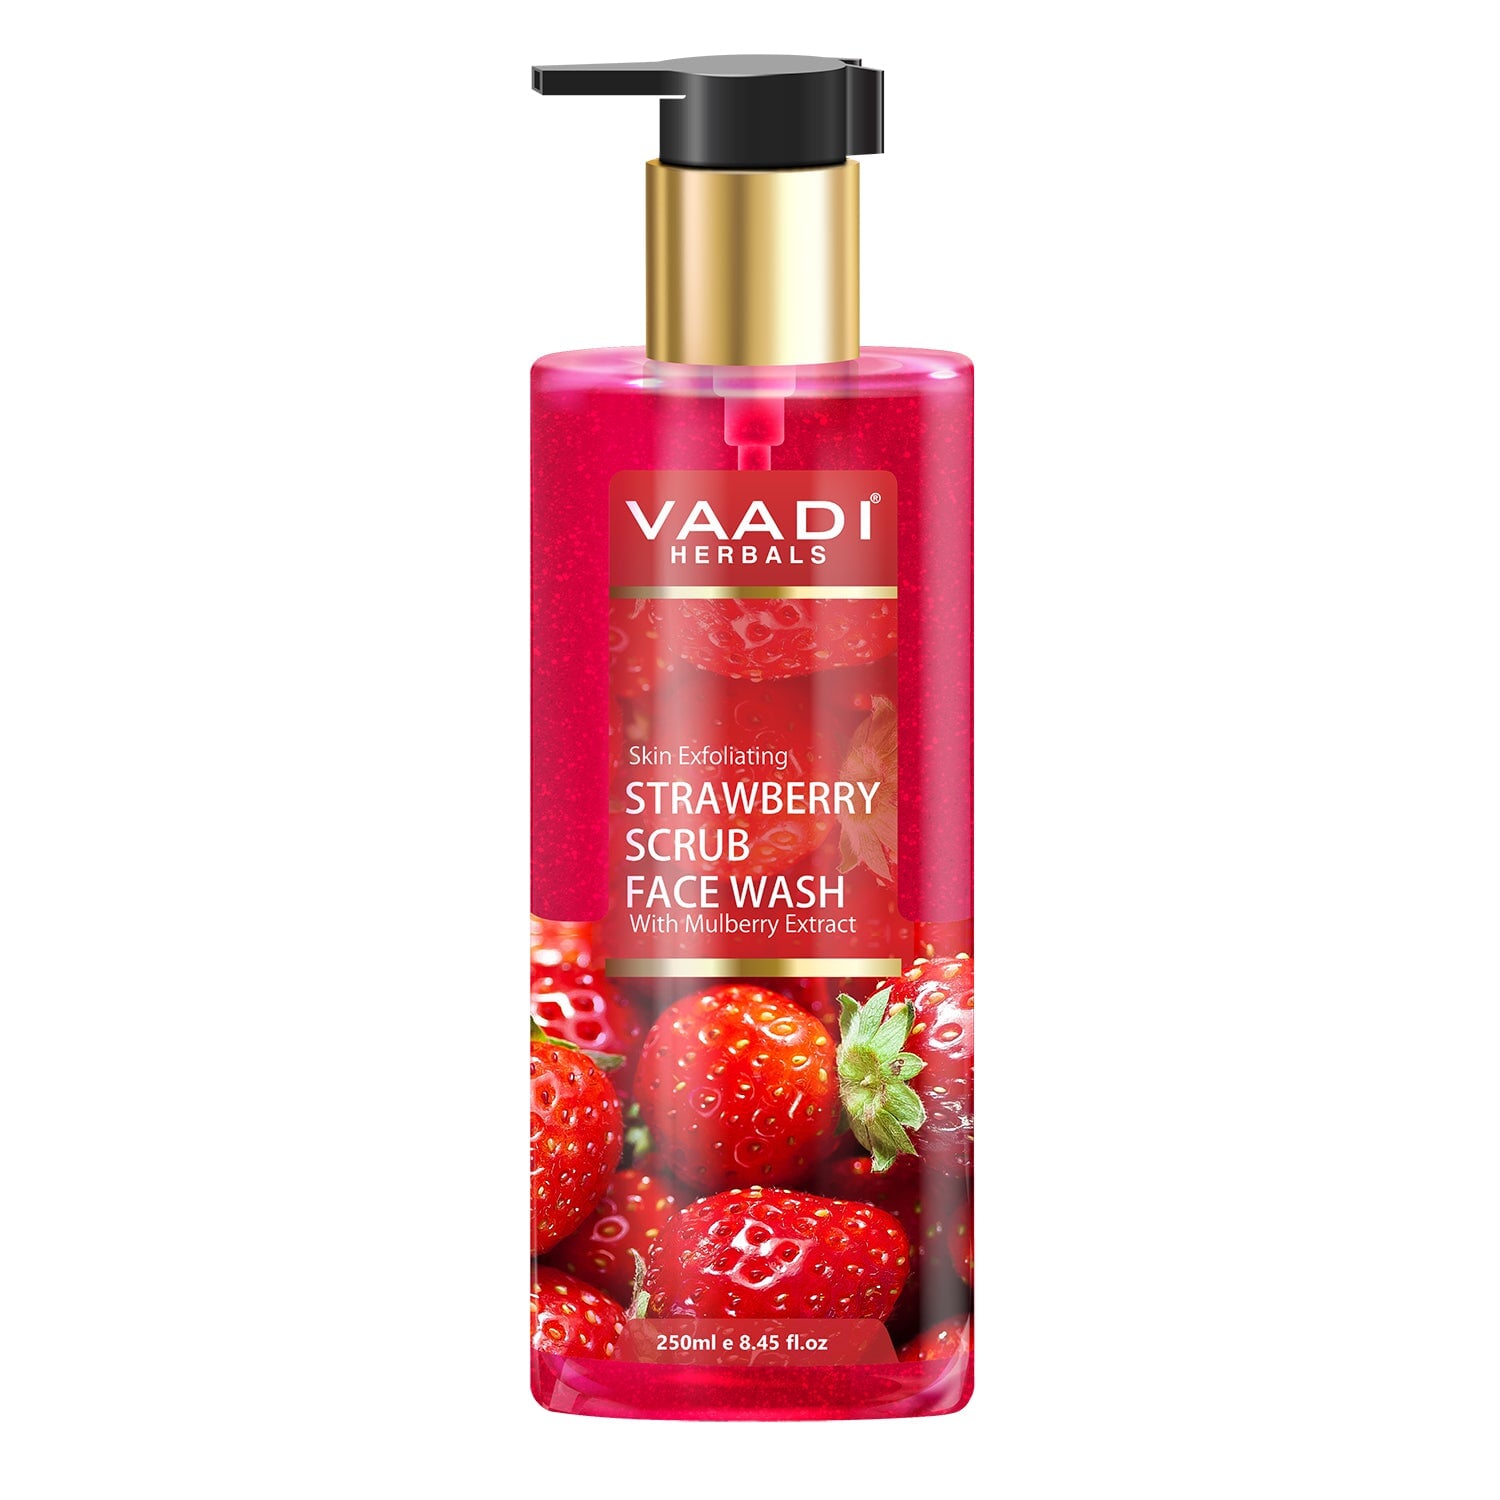 Skin Exfoliating Organic Strawberry Scrub Face Wash with Mulberry Extract (250ml/ 8.45 fl oz)